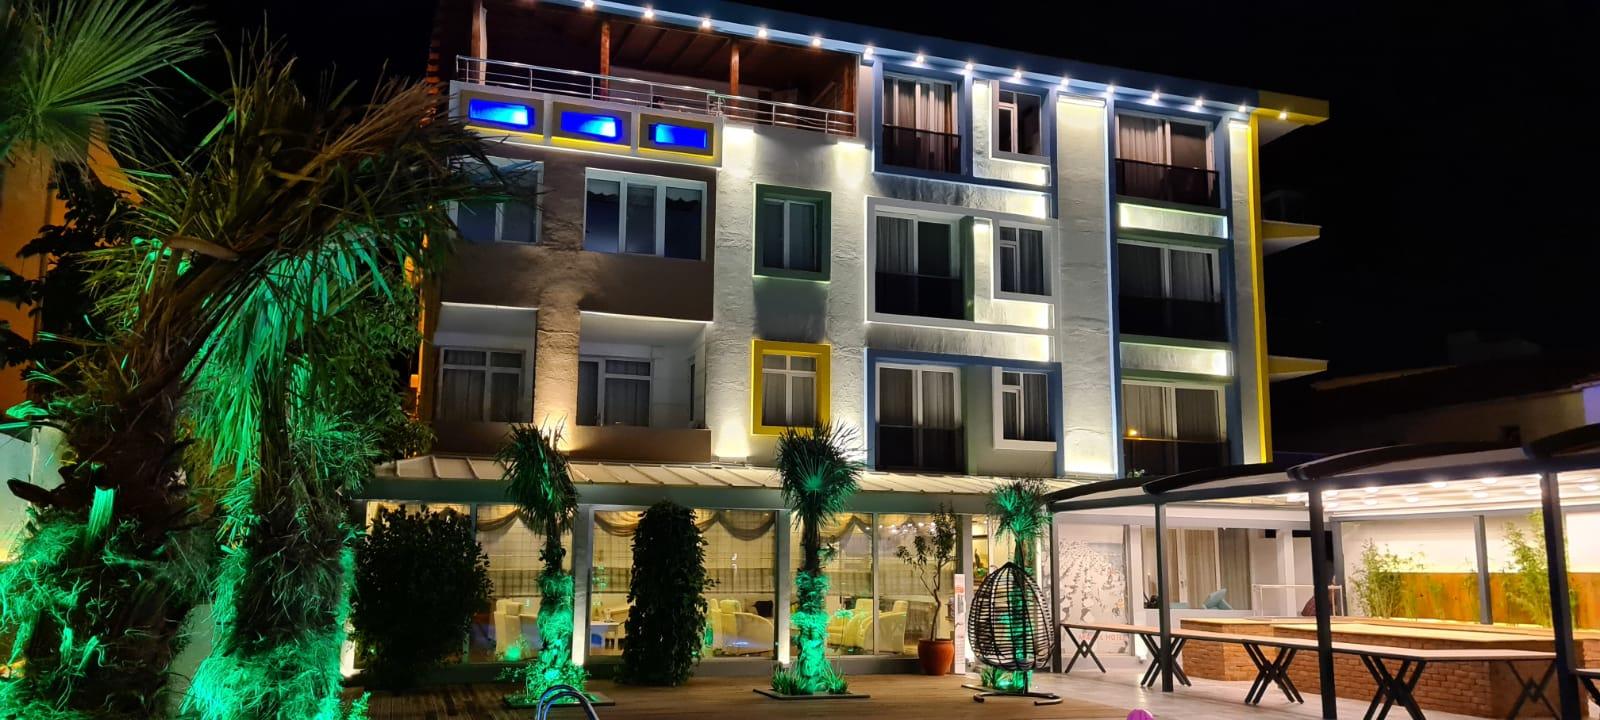 Cem gul hotel Sarimsakli